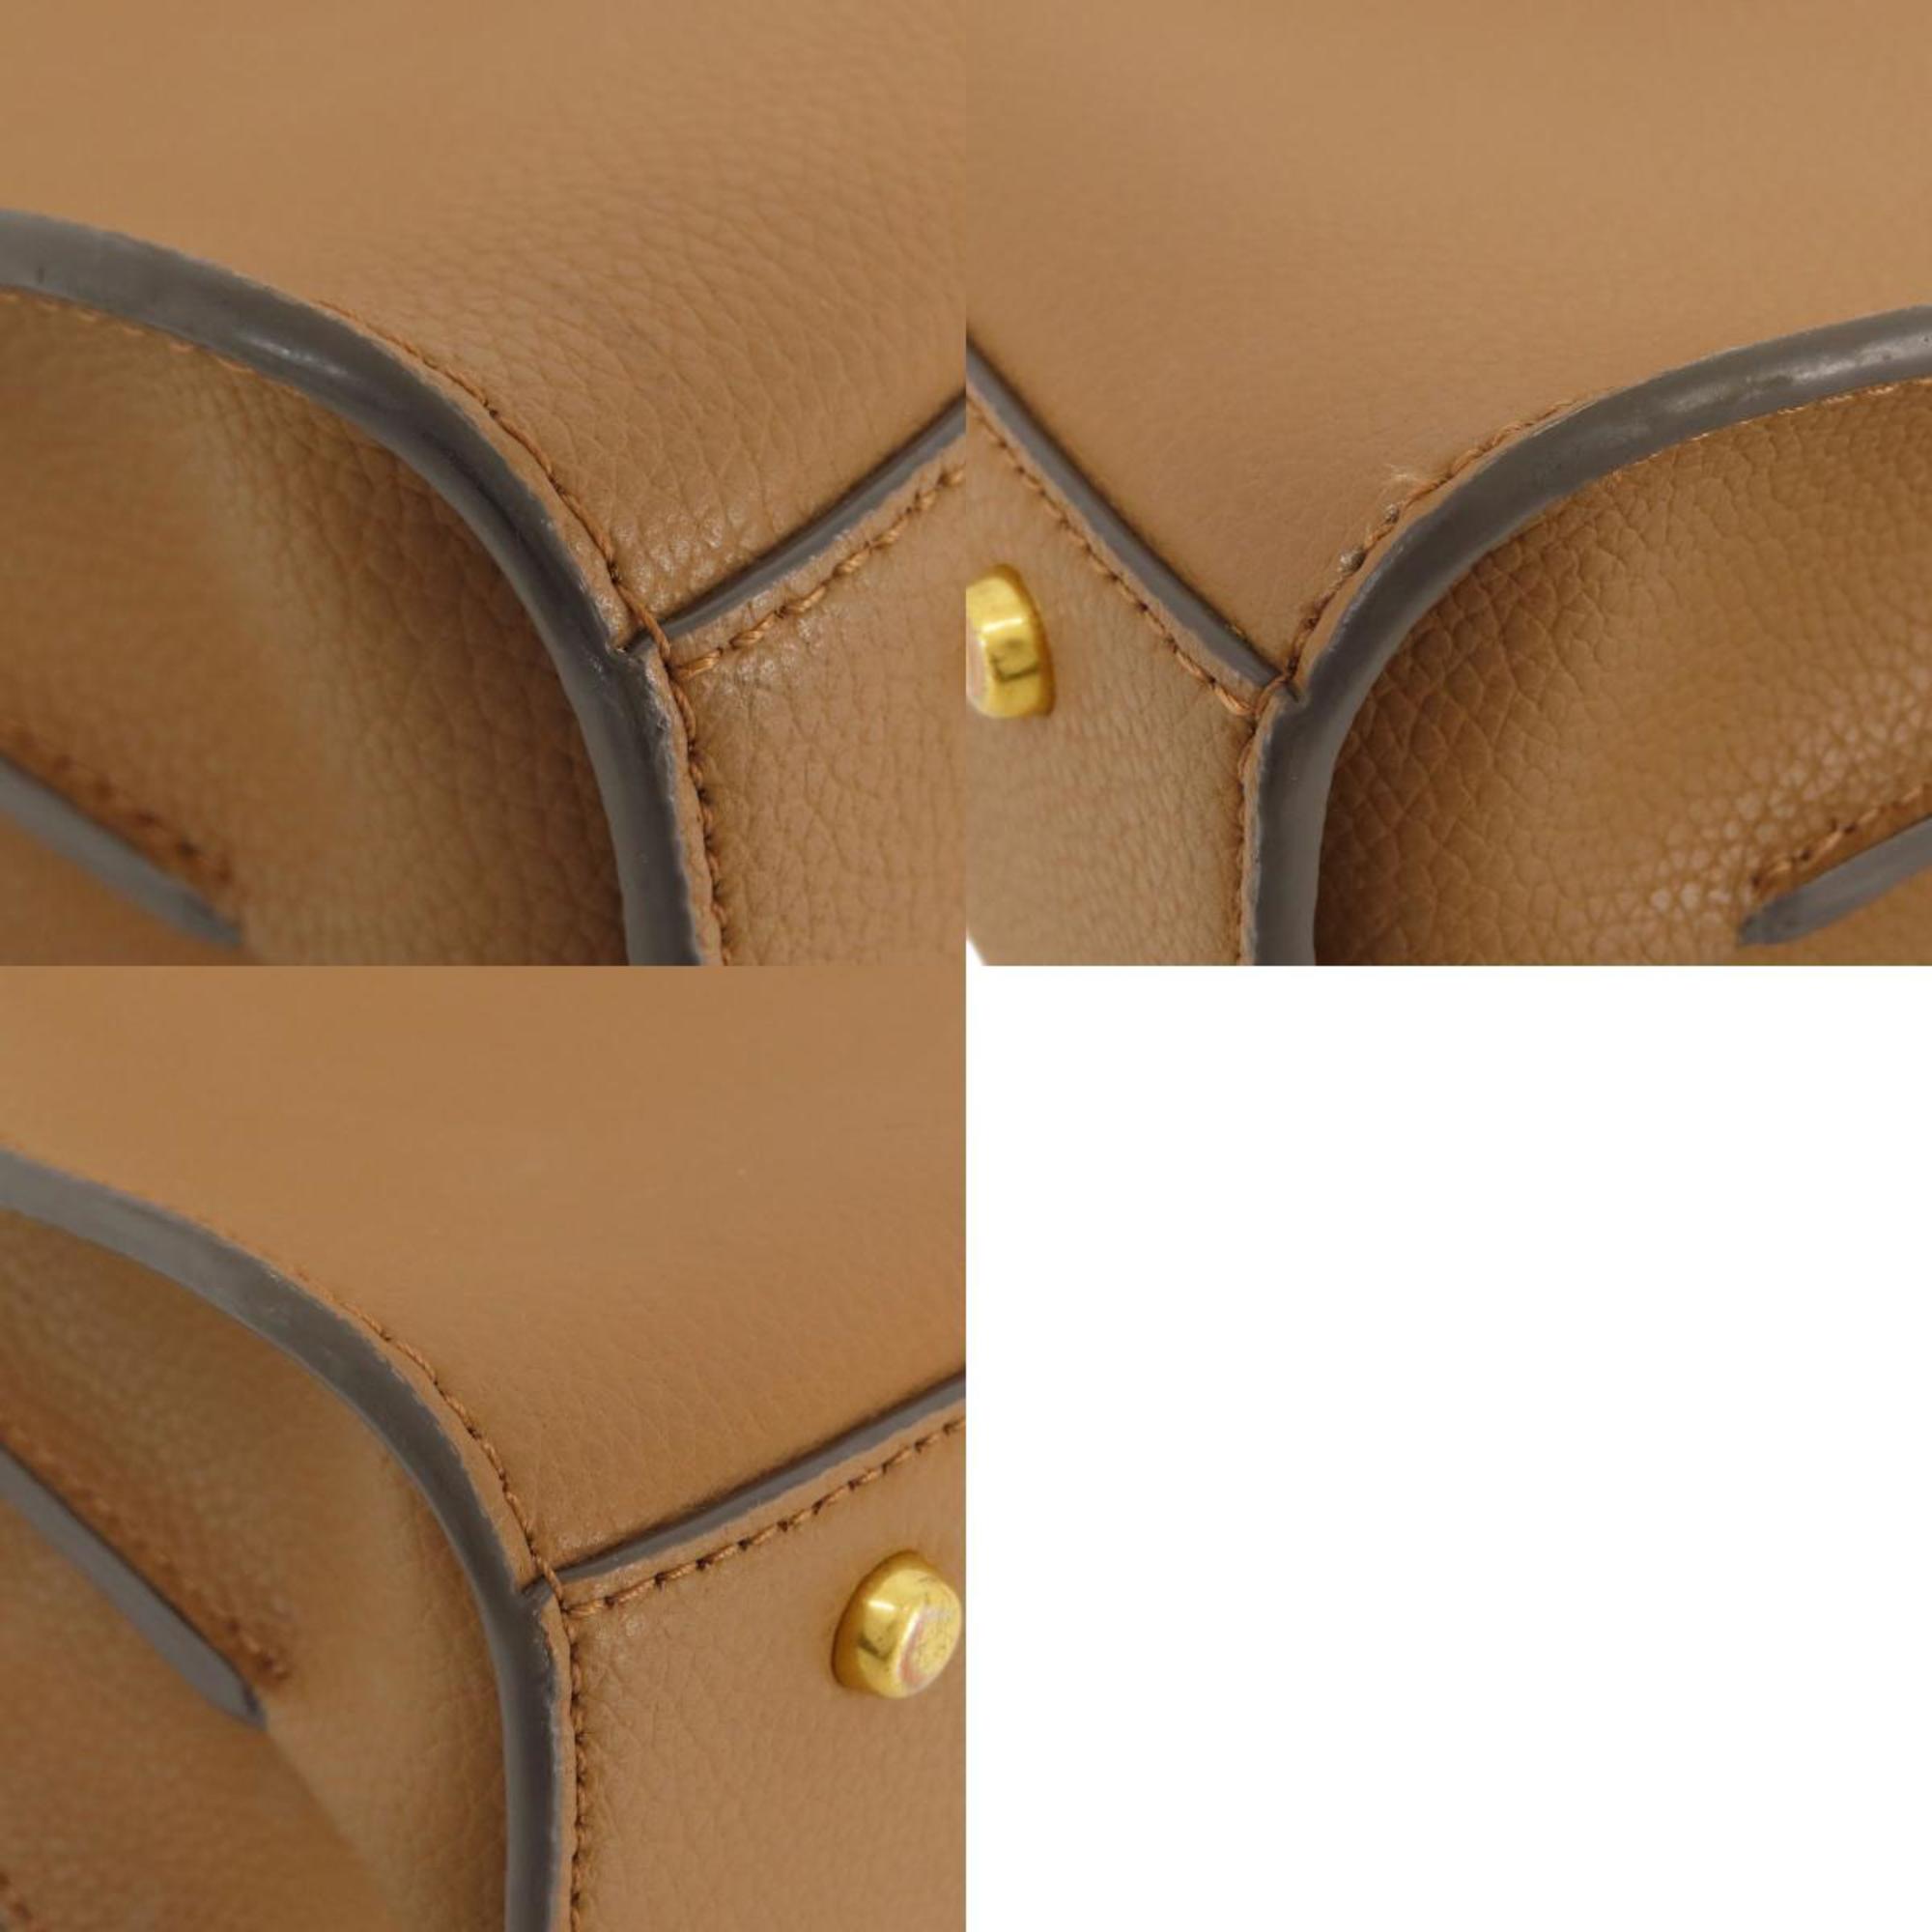 Tory Burch handbag leather for women